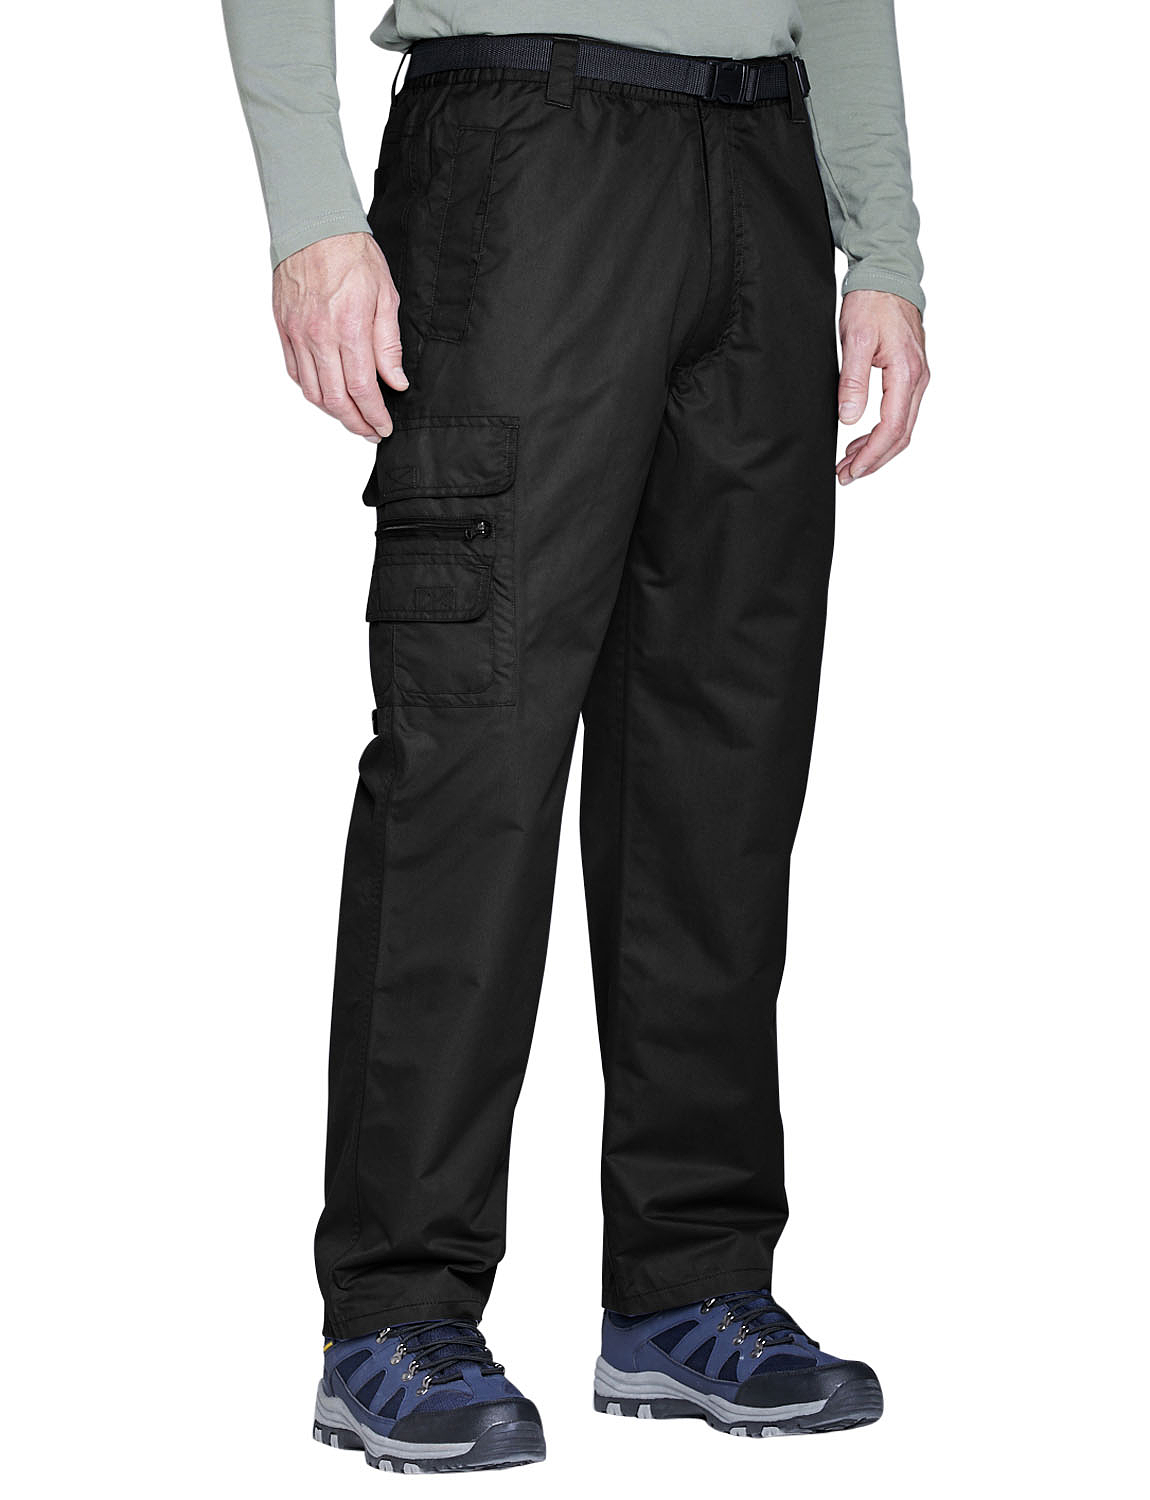 Mountain Warehouse 5-6 Fleece Waterproof Trousers Warm VGC Kids Puddle Rain  Hike | eBay